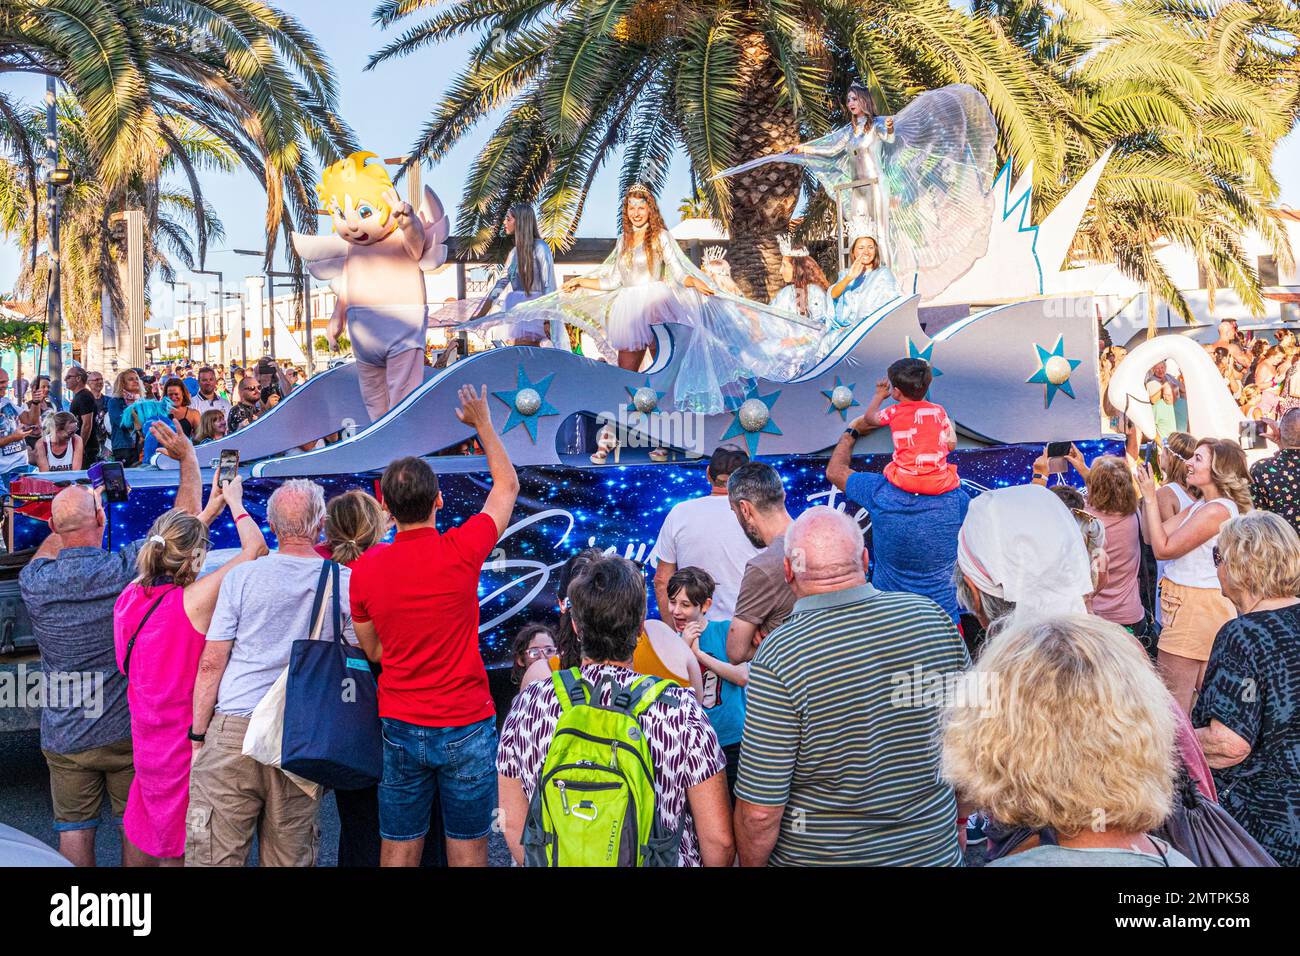 One of the floats in the traditional Spanish Three Kings Parade (Cabalgata de los Reyes Magos) on 5th January at Caleta de Fuste, Fuerteventura Stock Photo